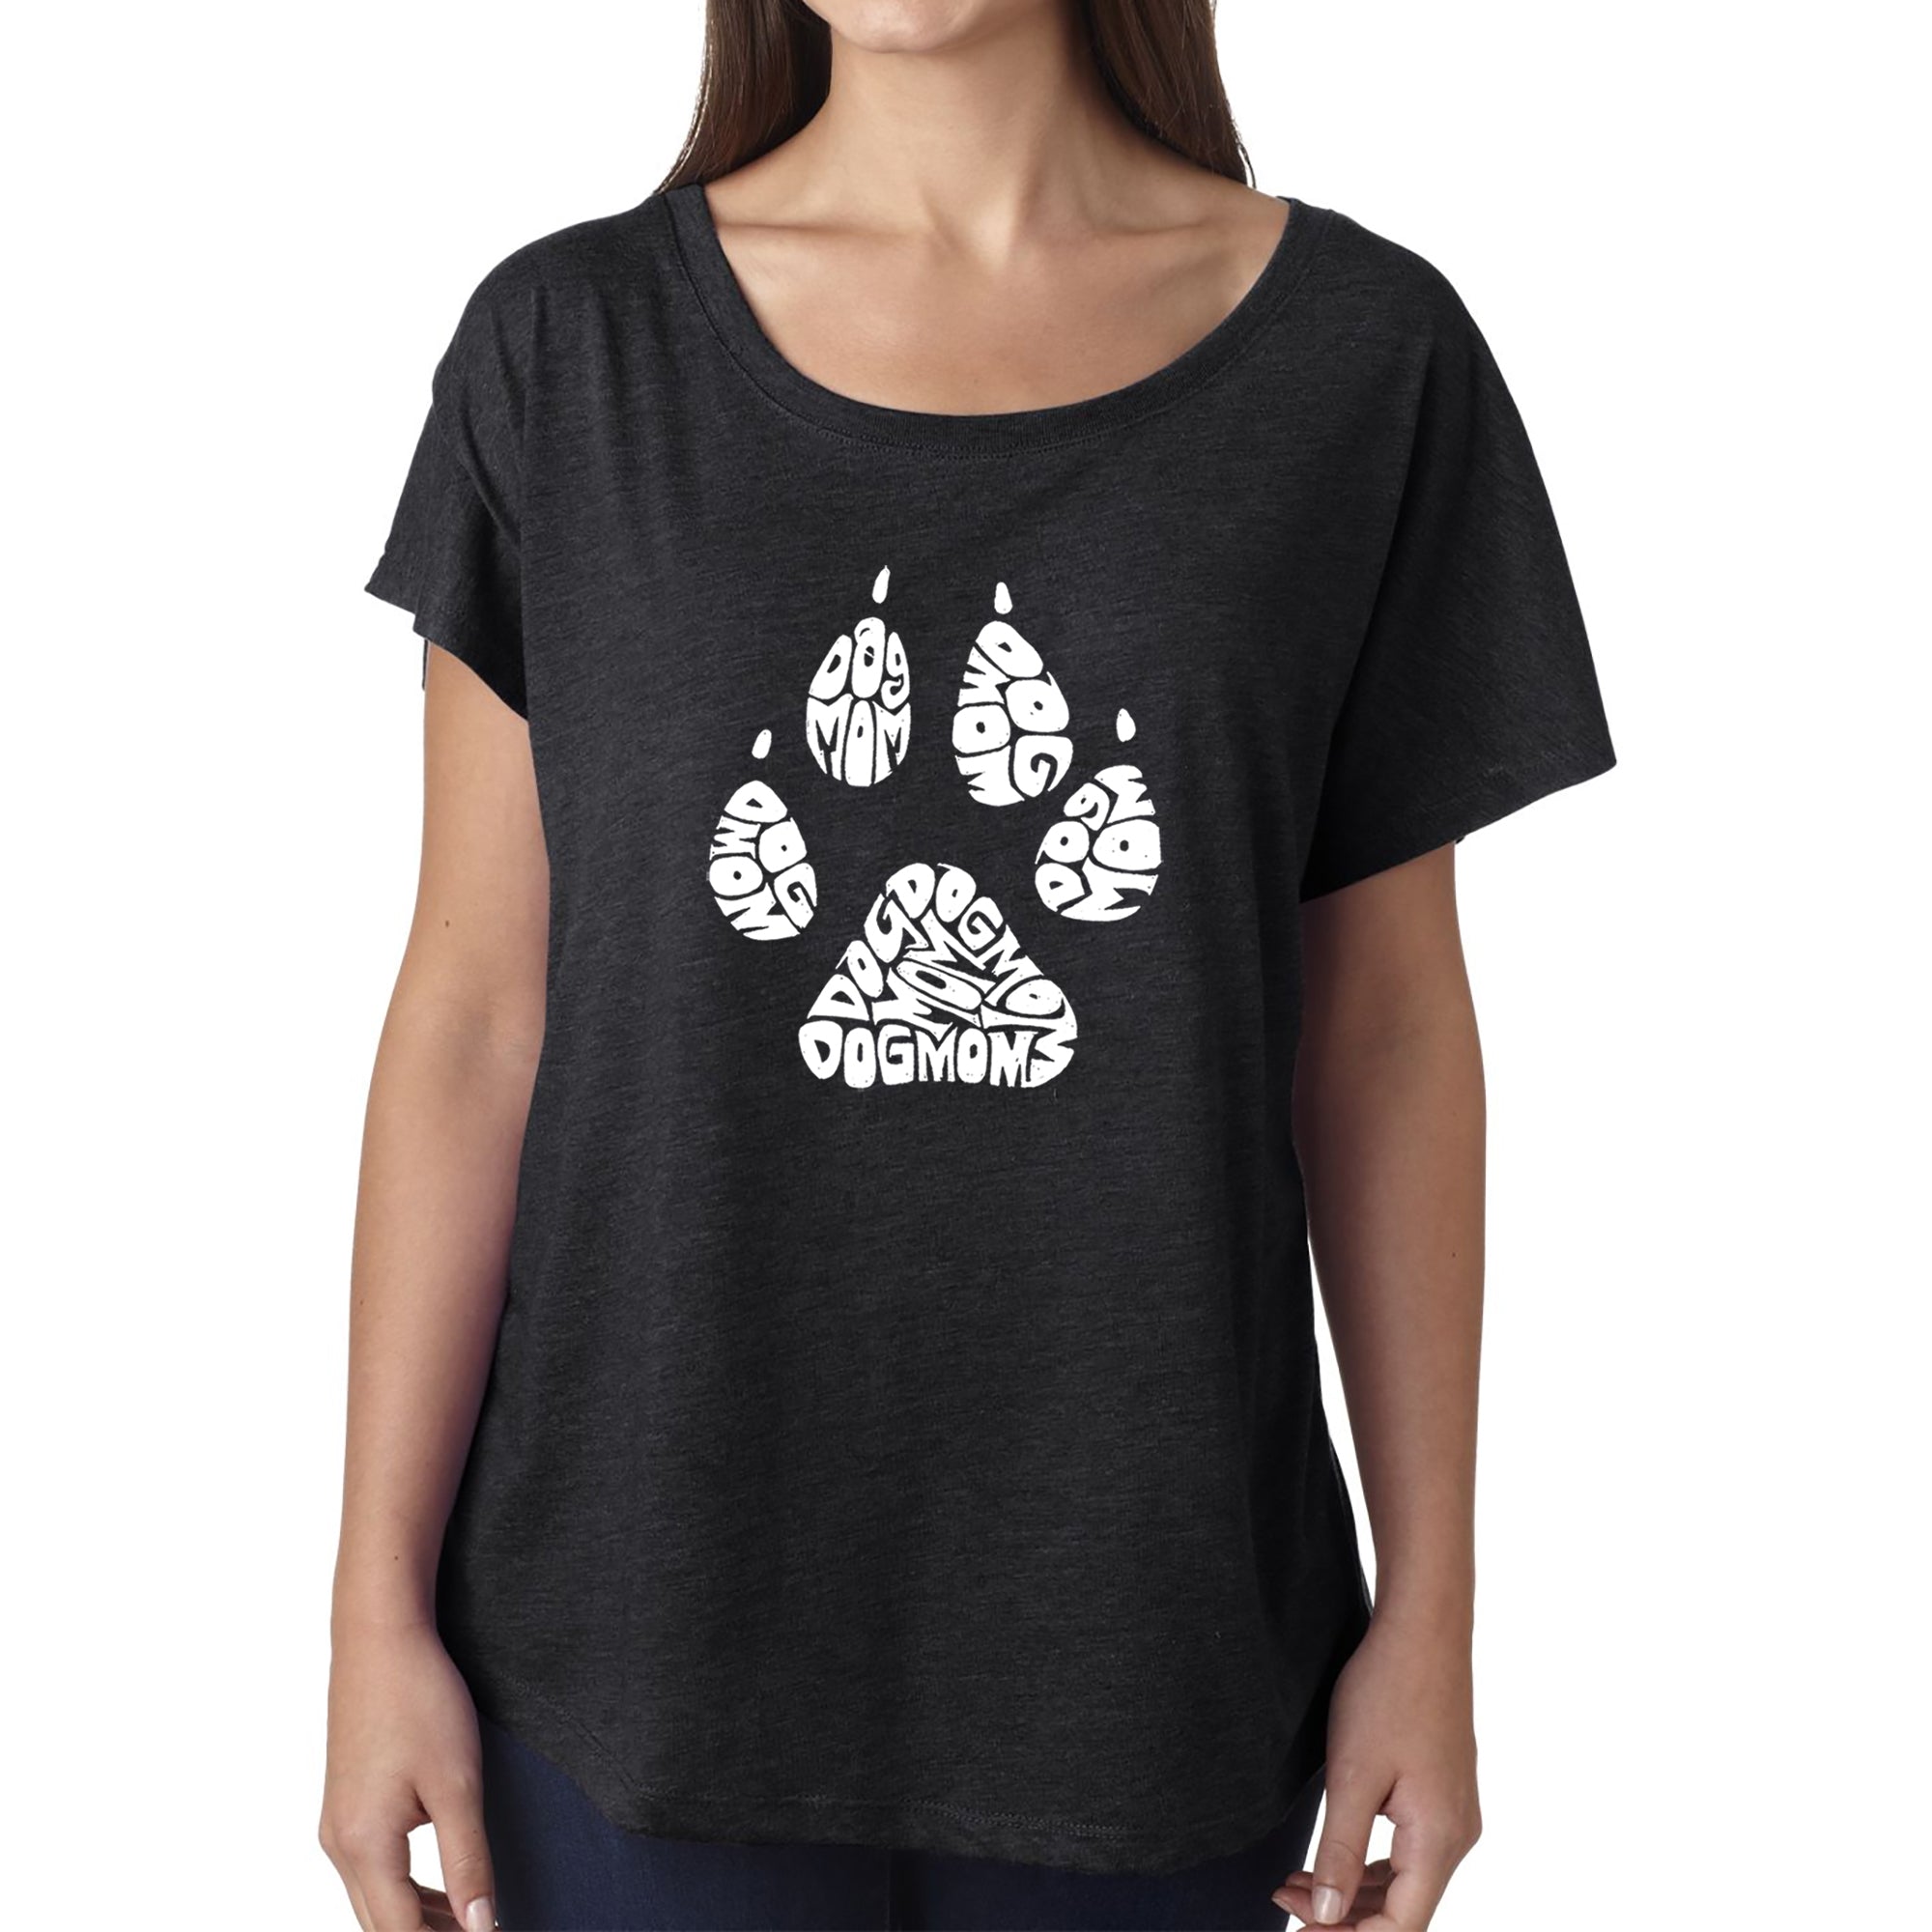 Dog Mom - Women's Loose Fit Dolman Cut Word Art Shirt - Black - X-Large